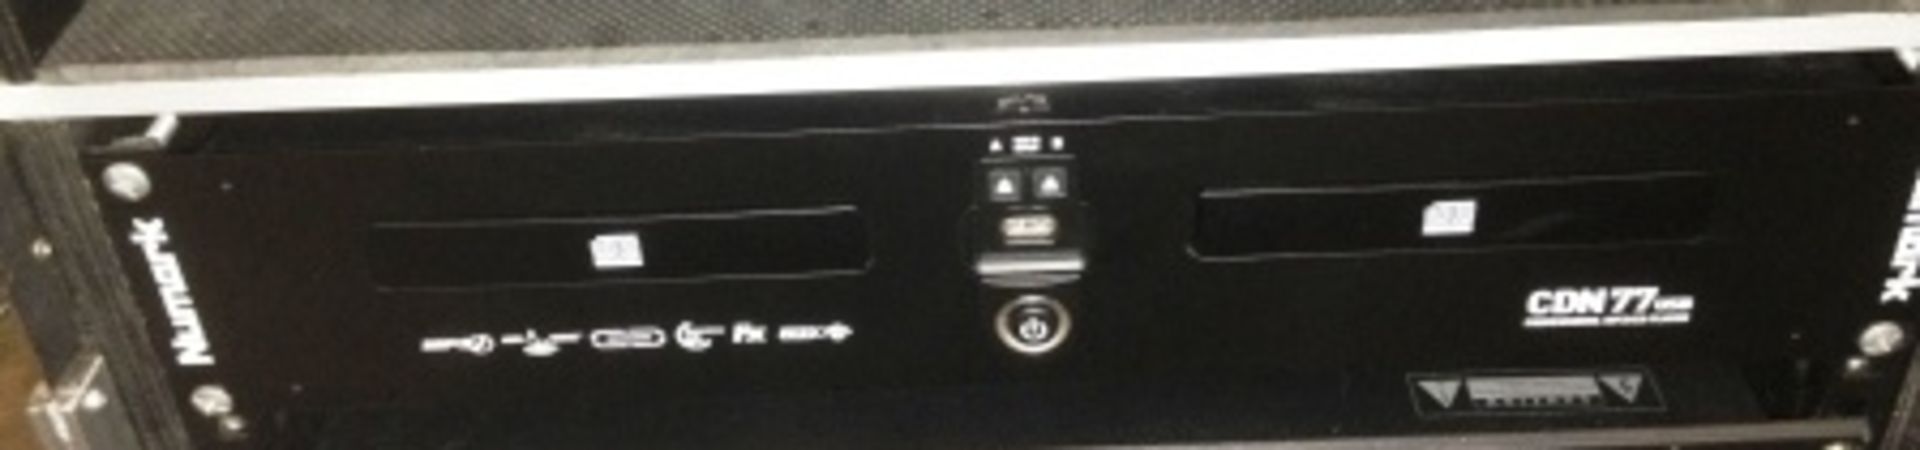 Numark dual USB and MP3 CD player mixer Model: DCN77 - Image 2 of 2